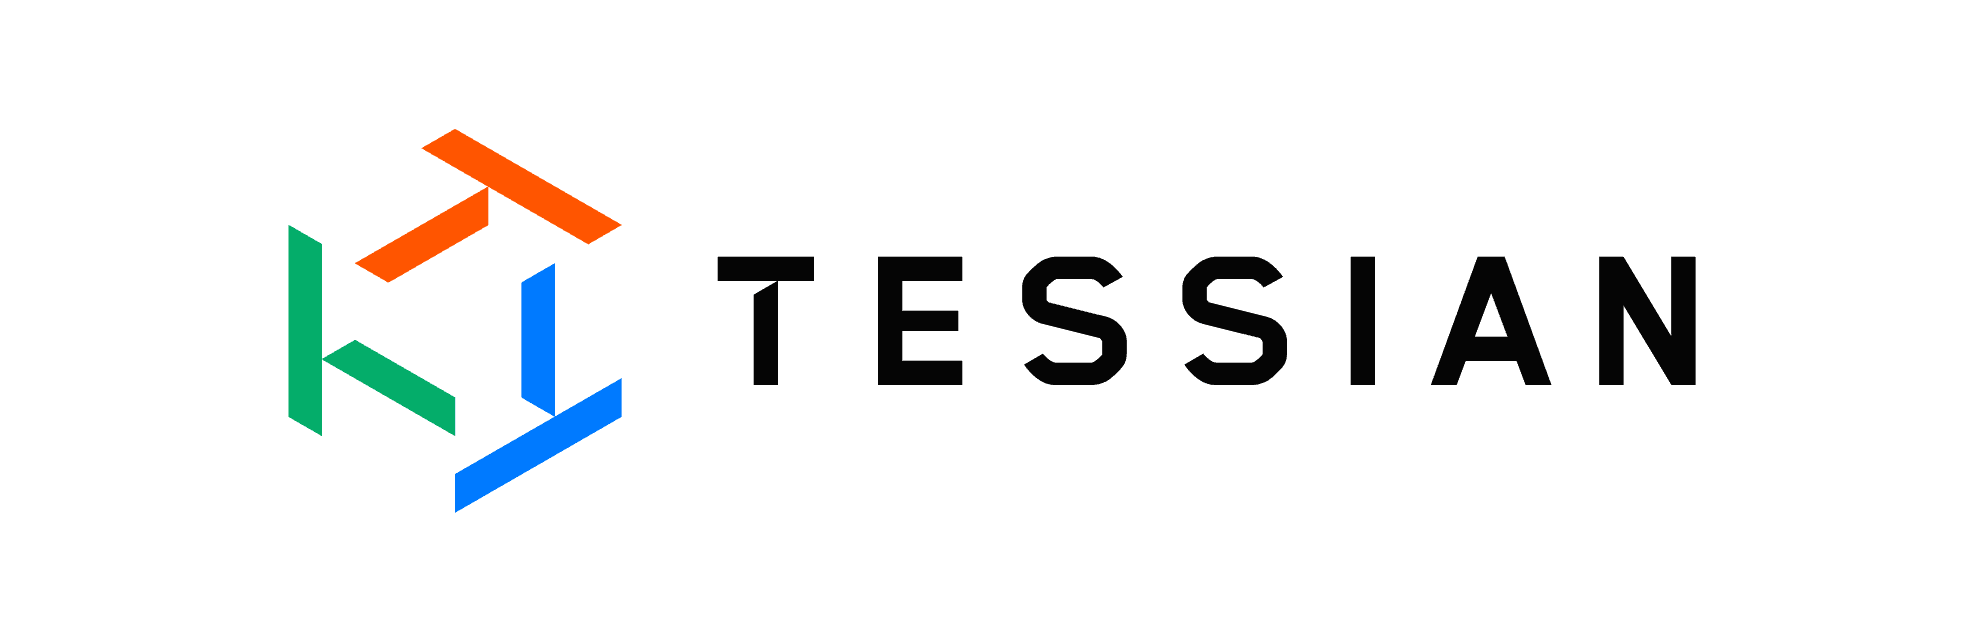 Tessian logo